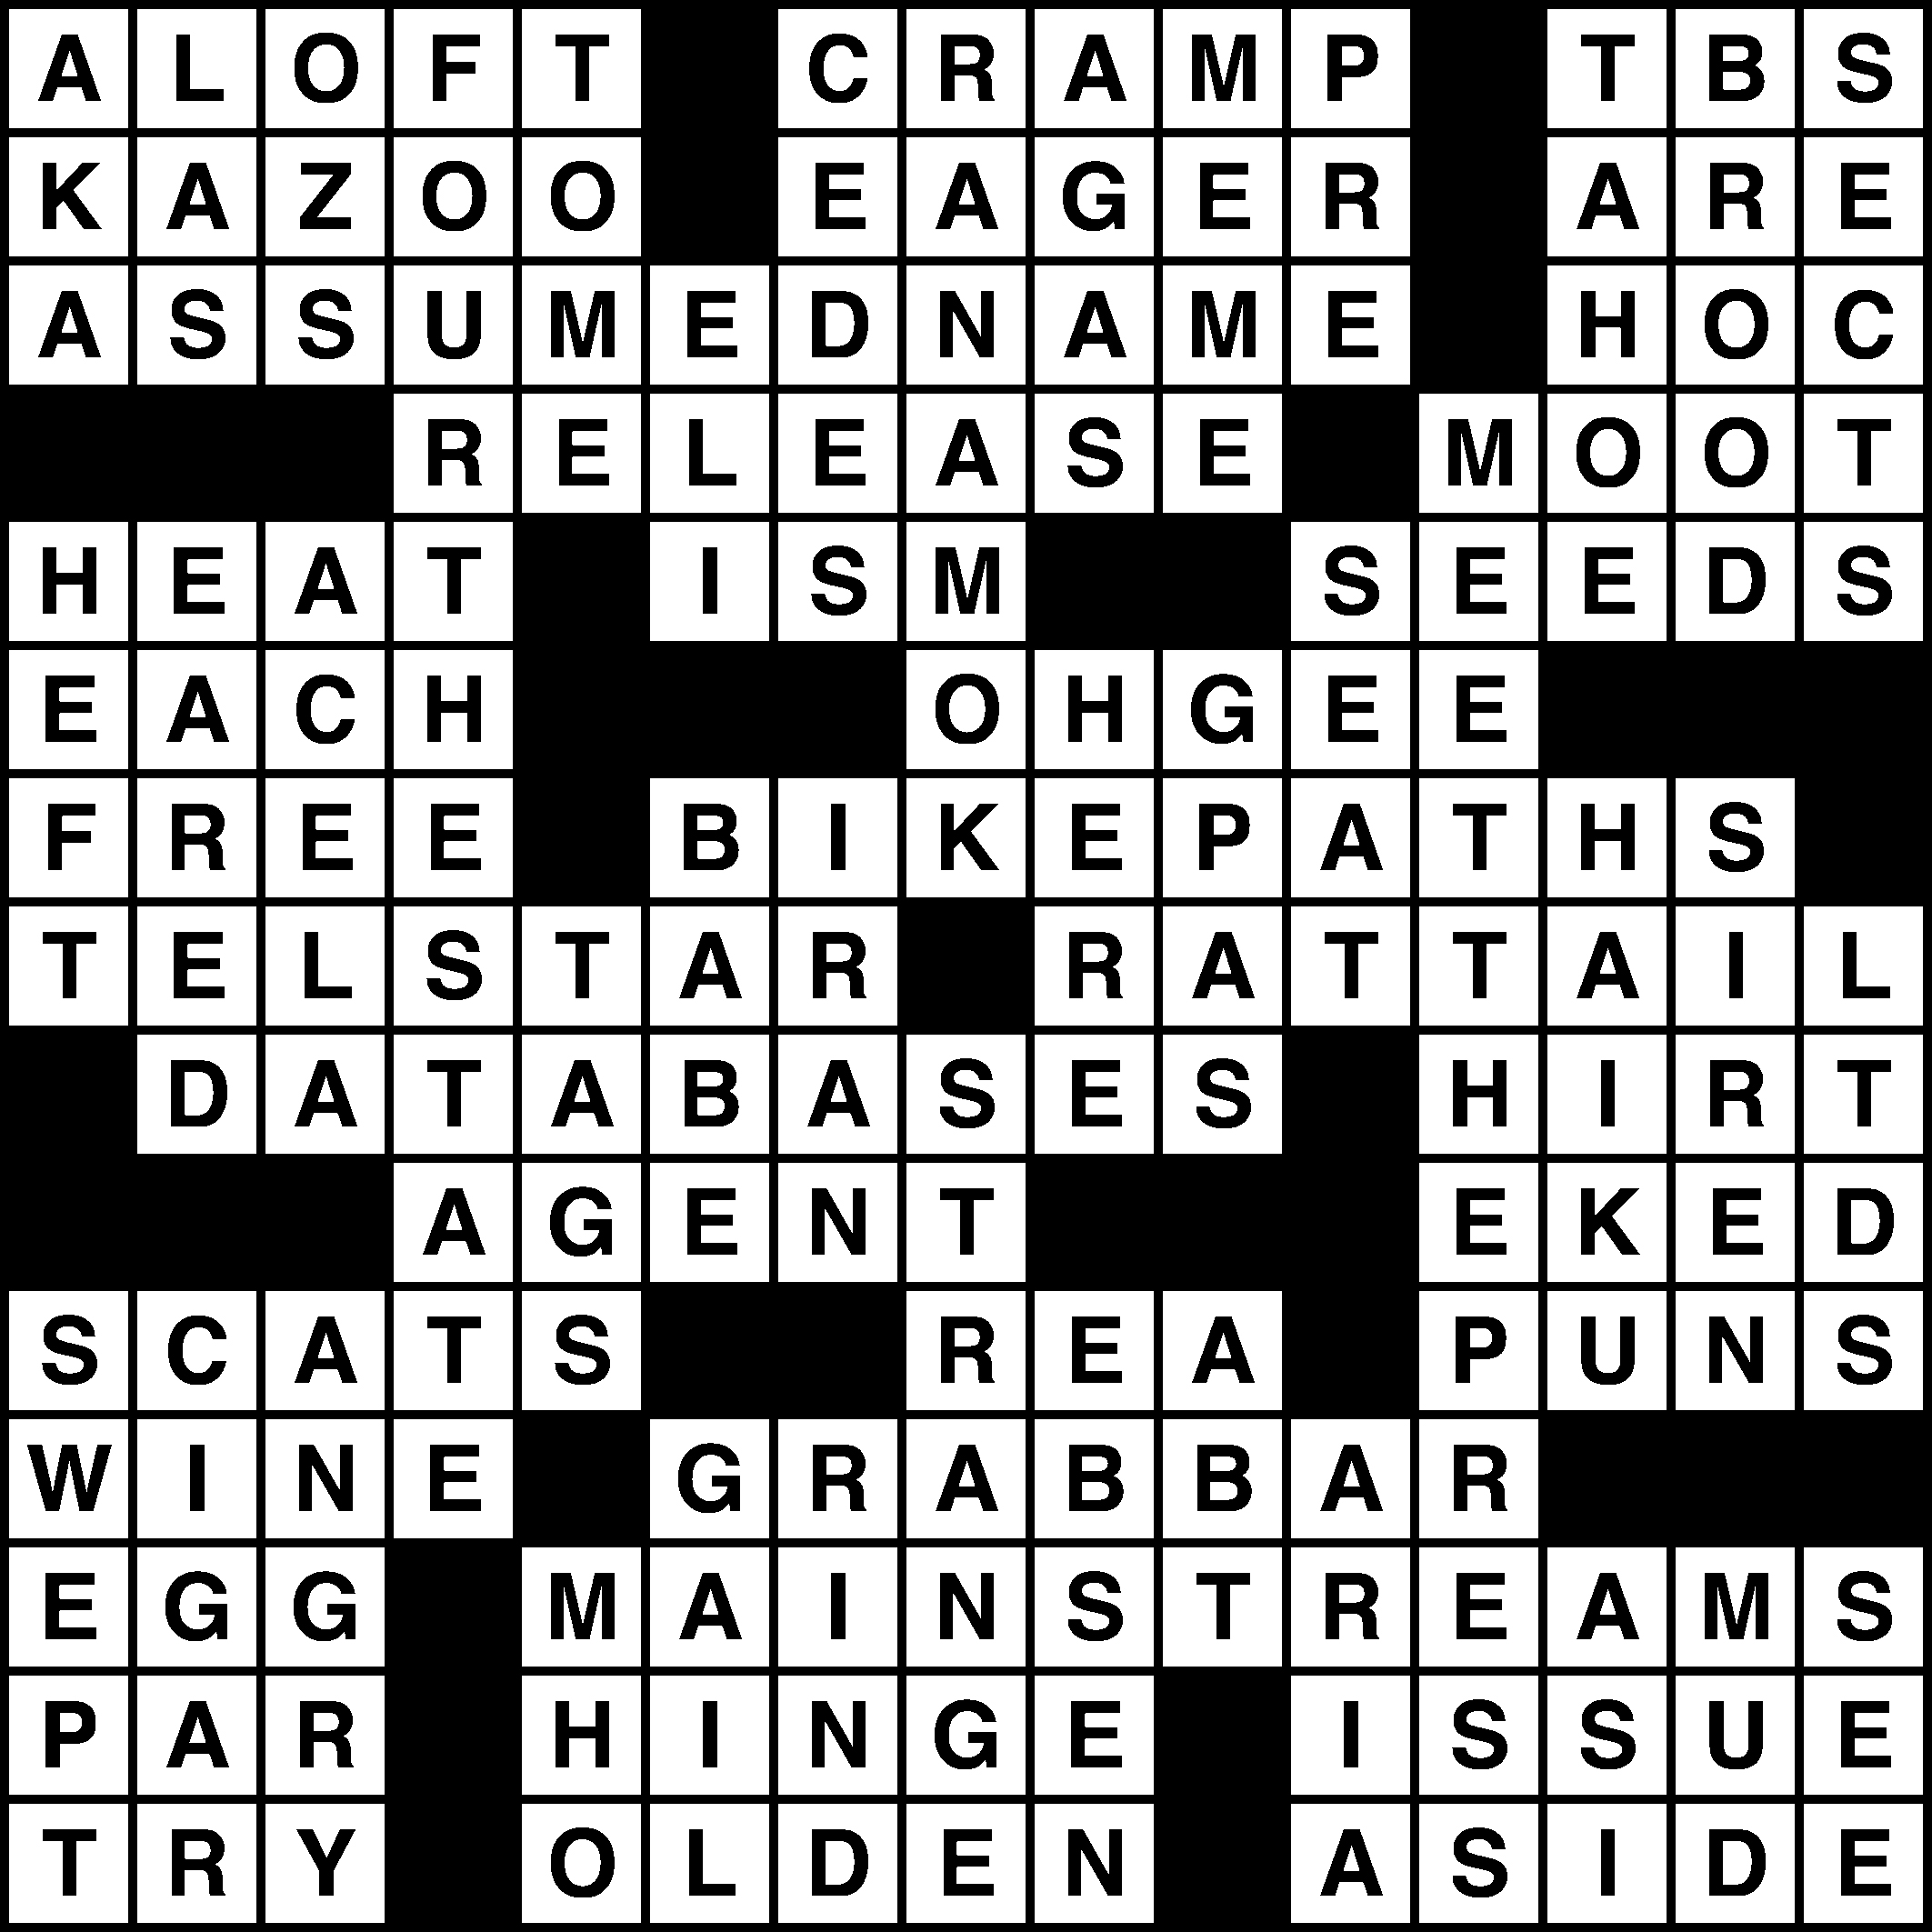 work tasks crossword clue 6 letters